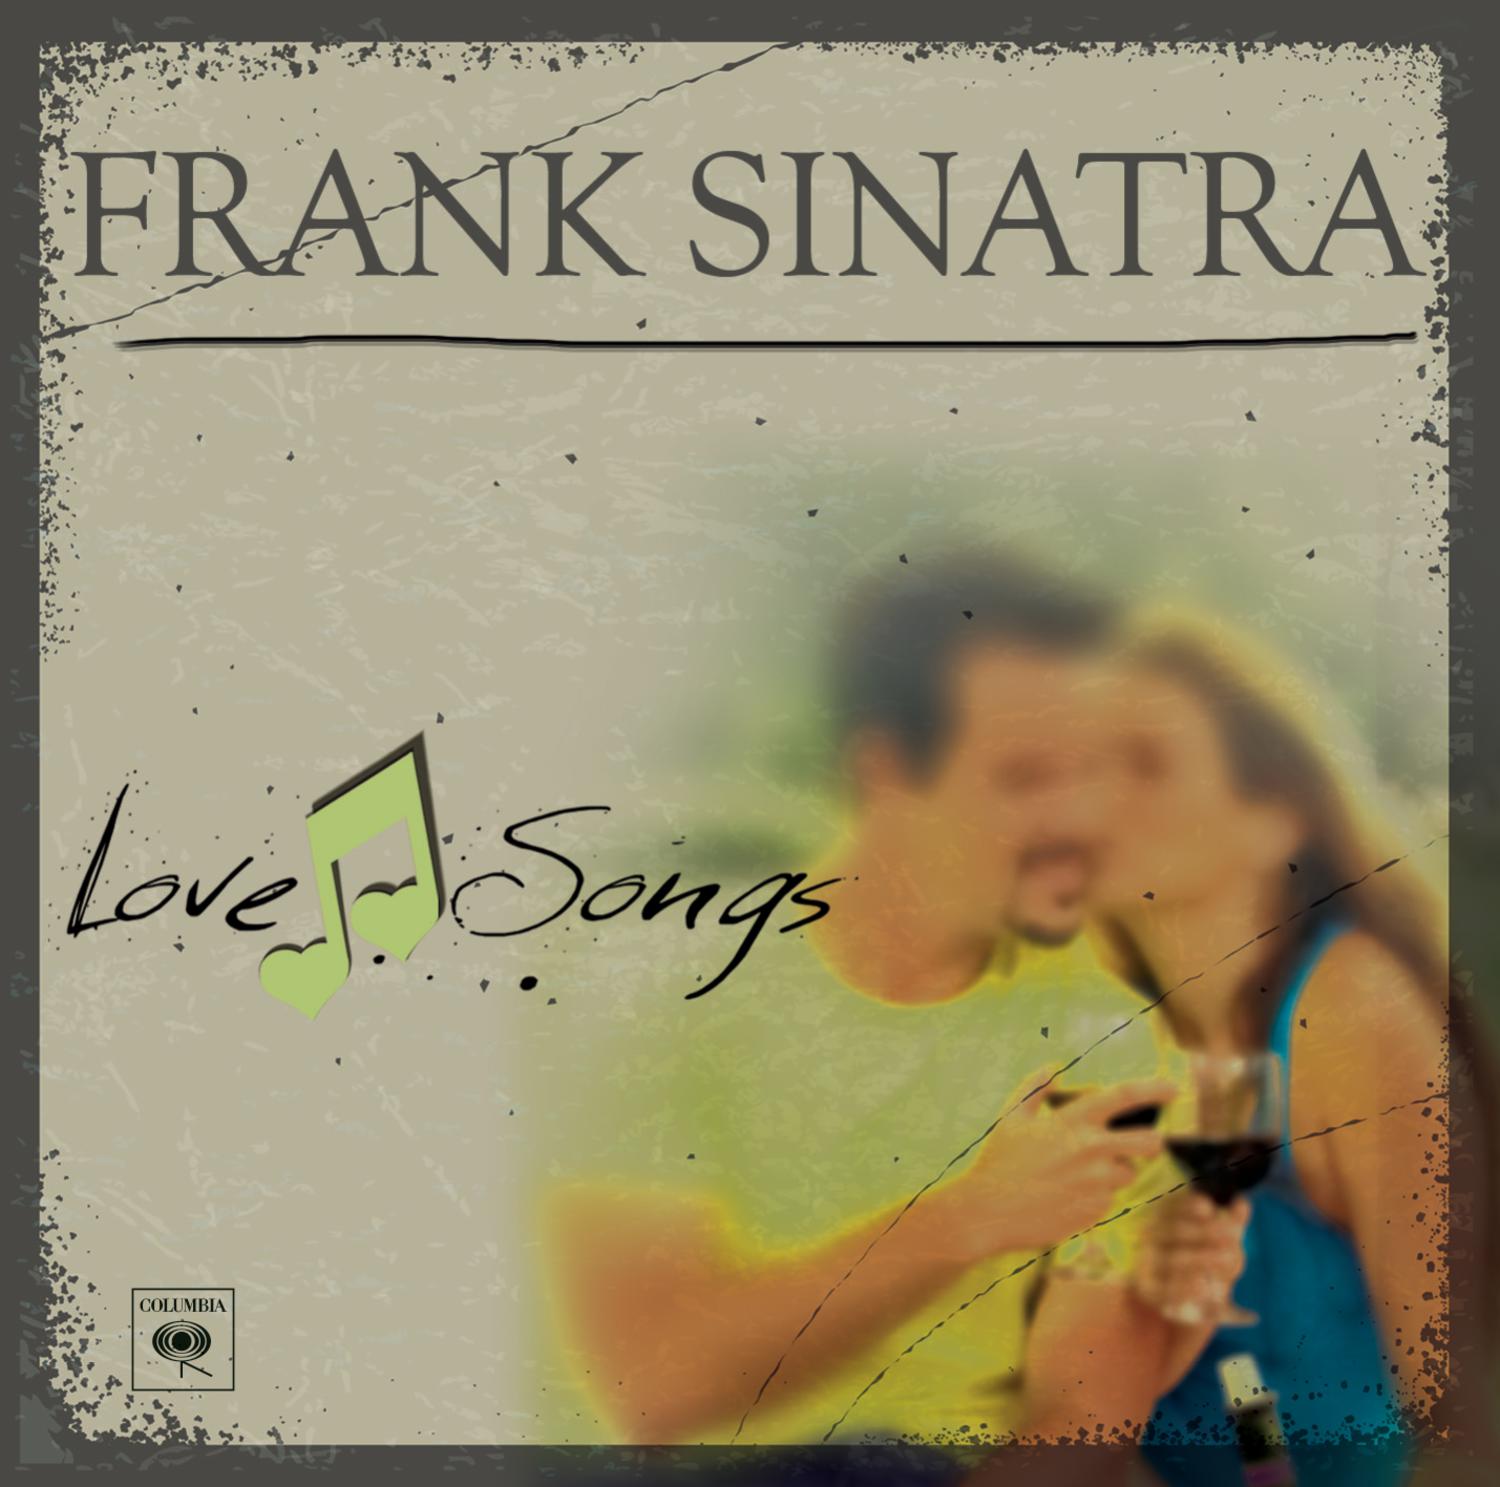 Frank Sinatra – Love Songs